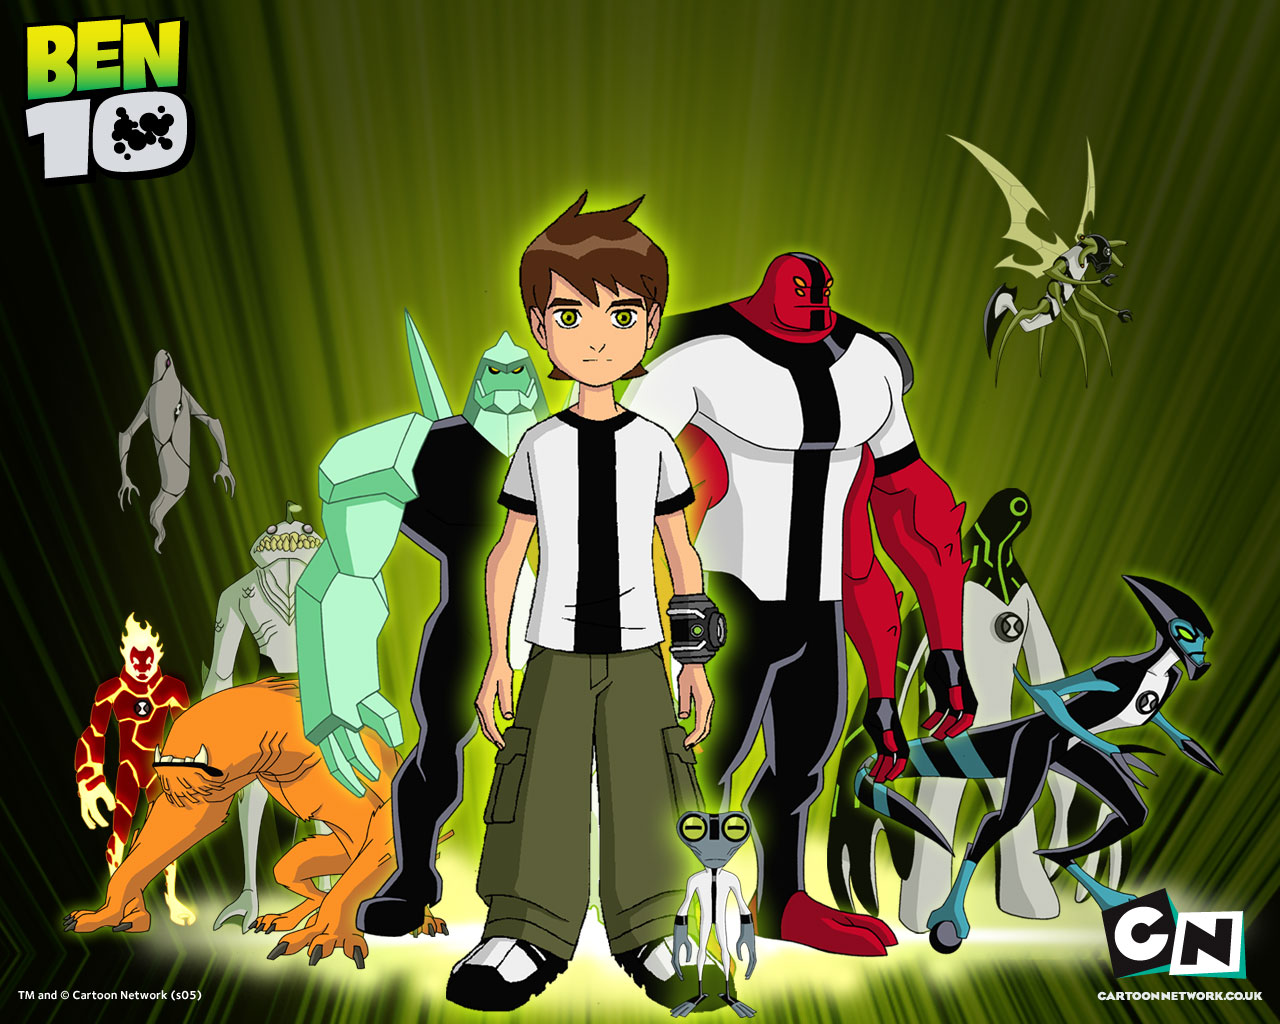 Ben 10 UPGRADE 4" Action Figure Bandai Cartoon Network 2006 | eBay